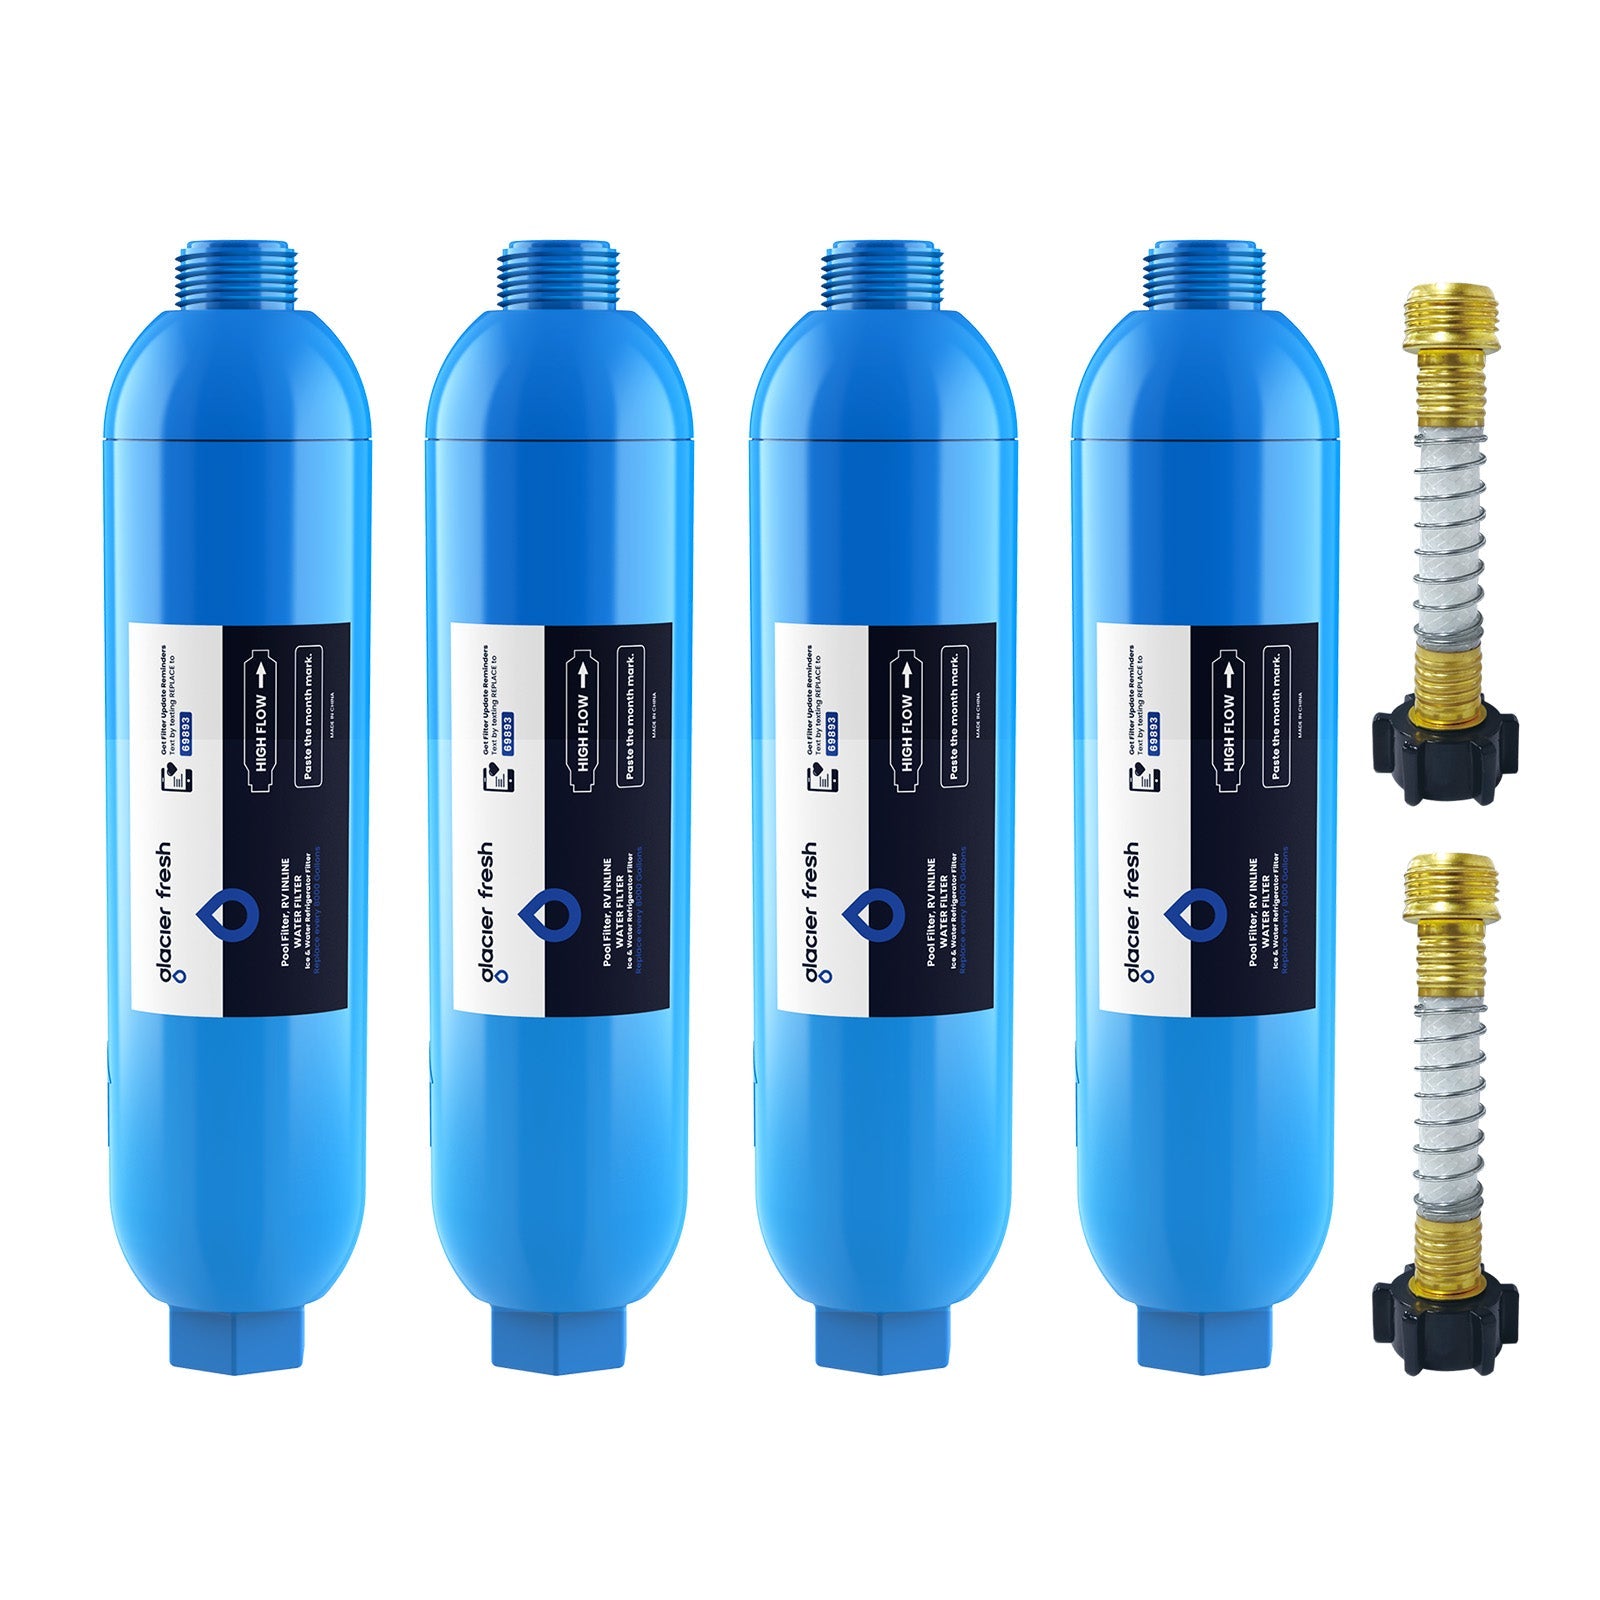 GlacierFresh P4INKFILTR Water Filter - 2 Pack